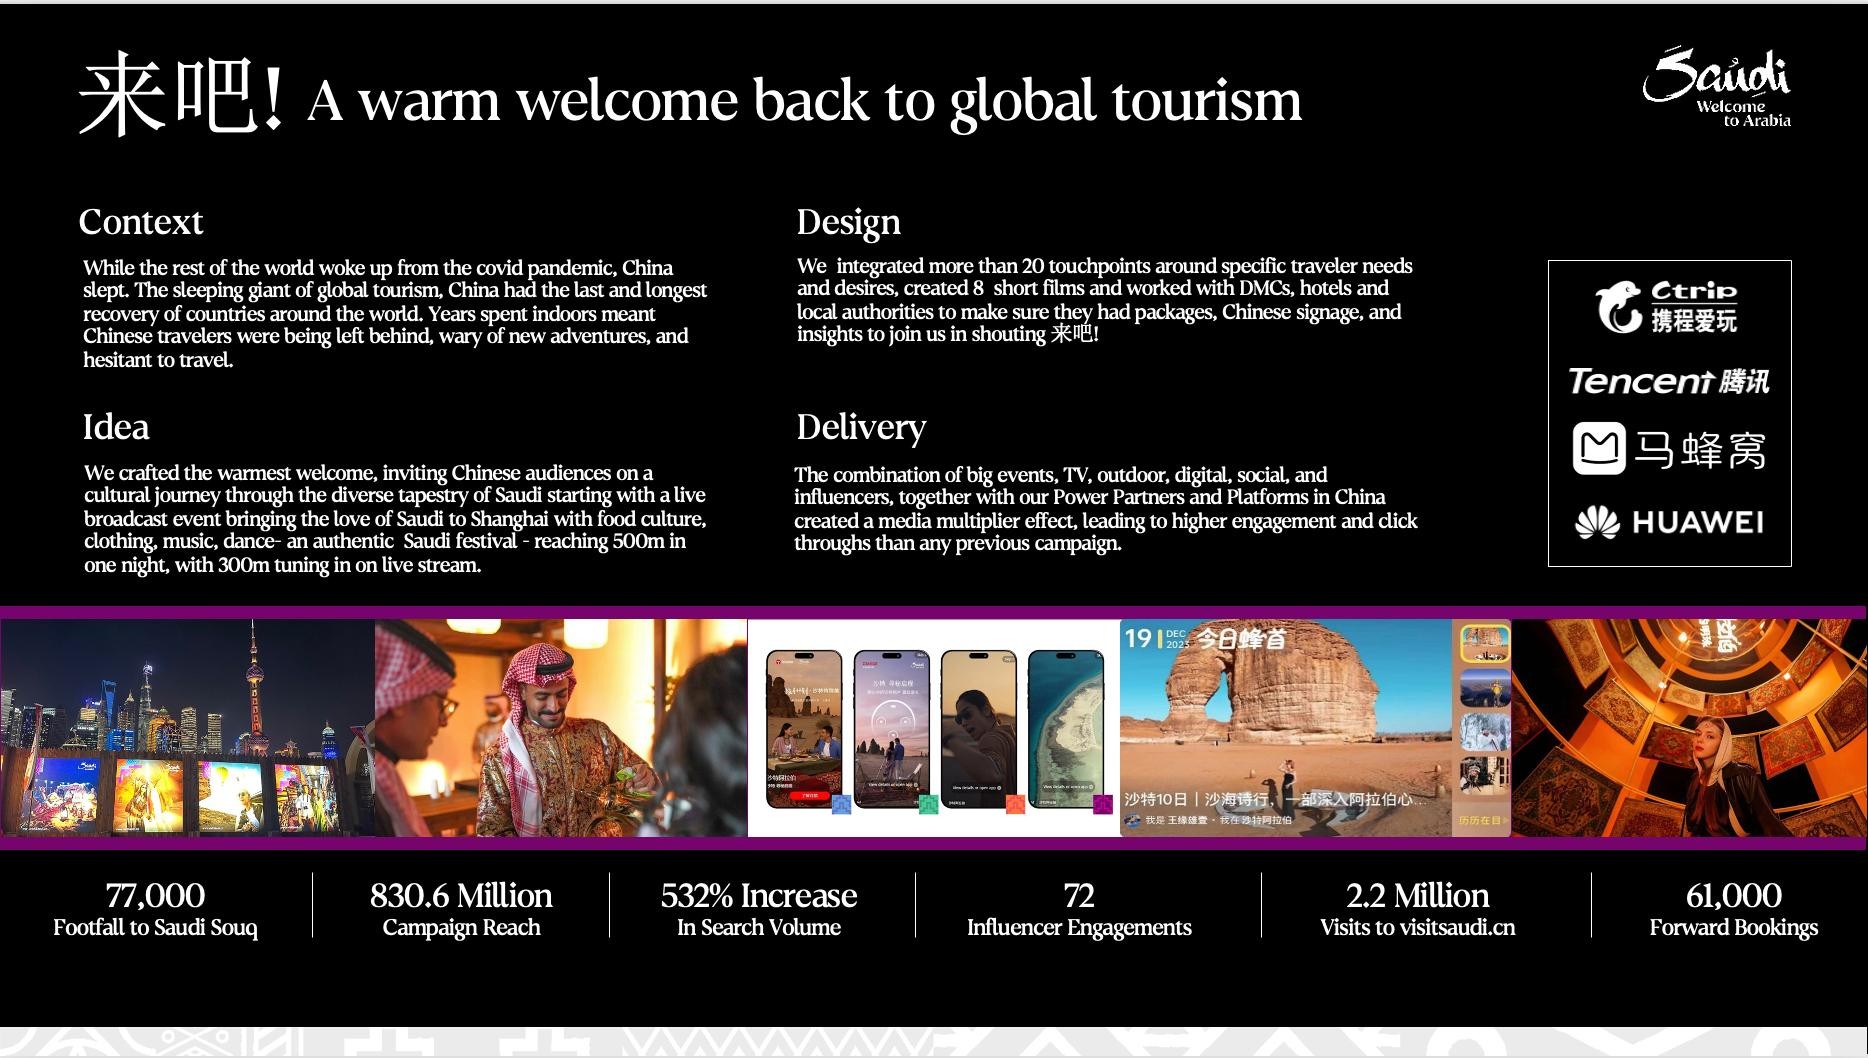 Saudi Tourism invites Chinese travelers to Lai Ba! (来吧!)